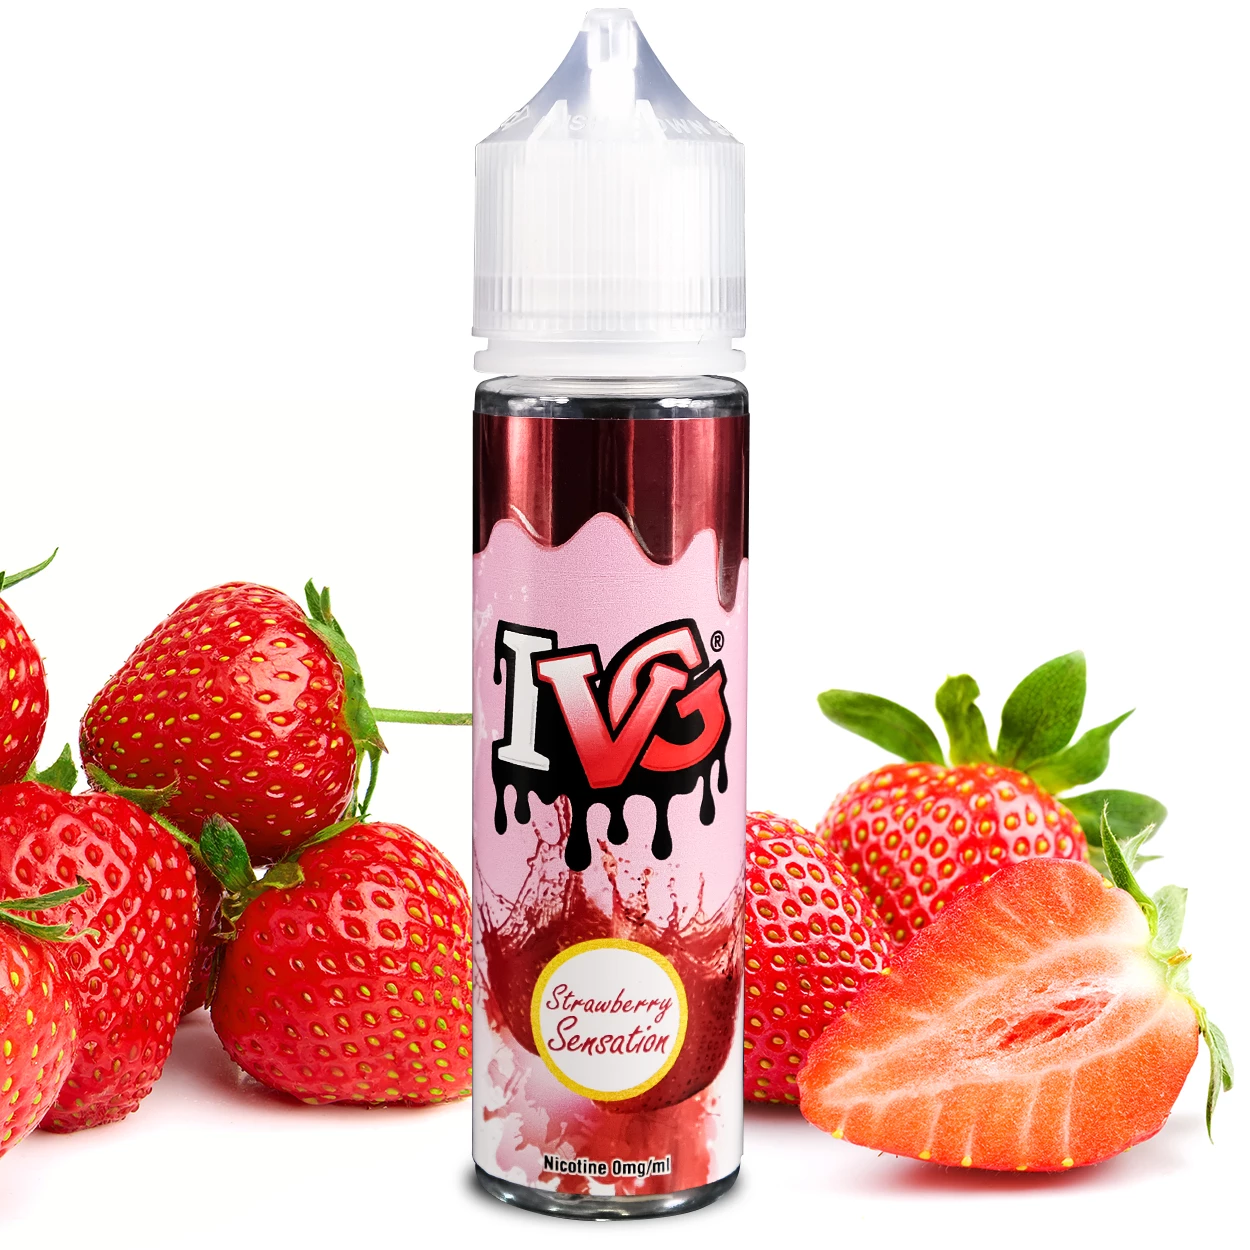 Strawberry-Sensation-IVG